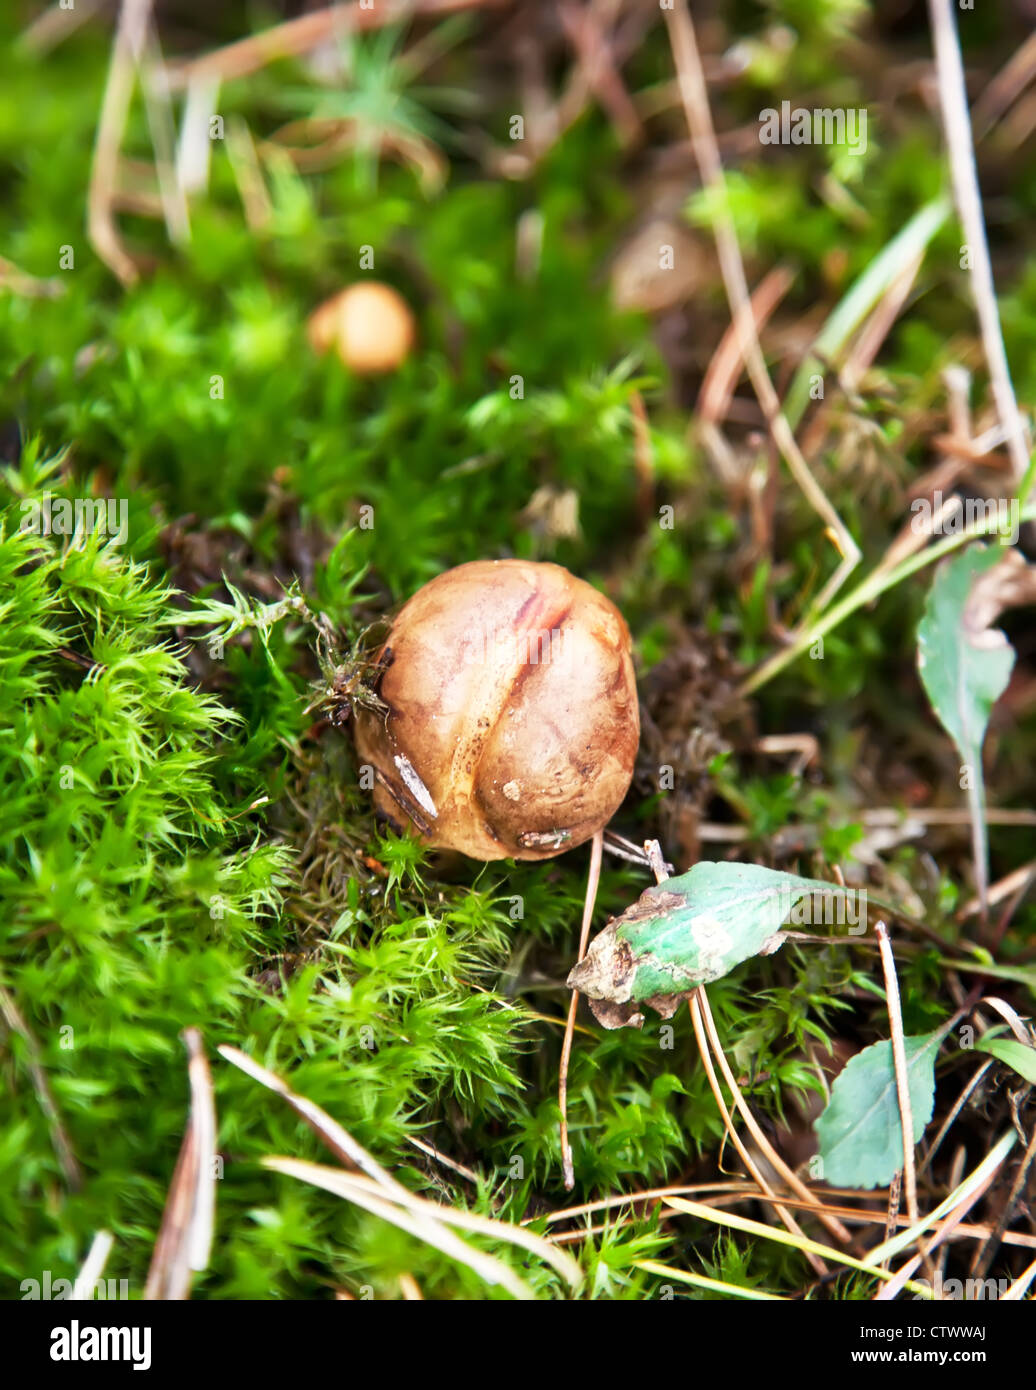 Small cep mushroom in moss Stock Photo